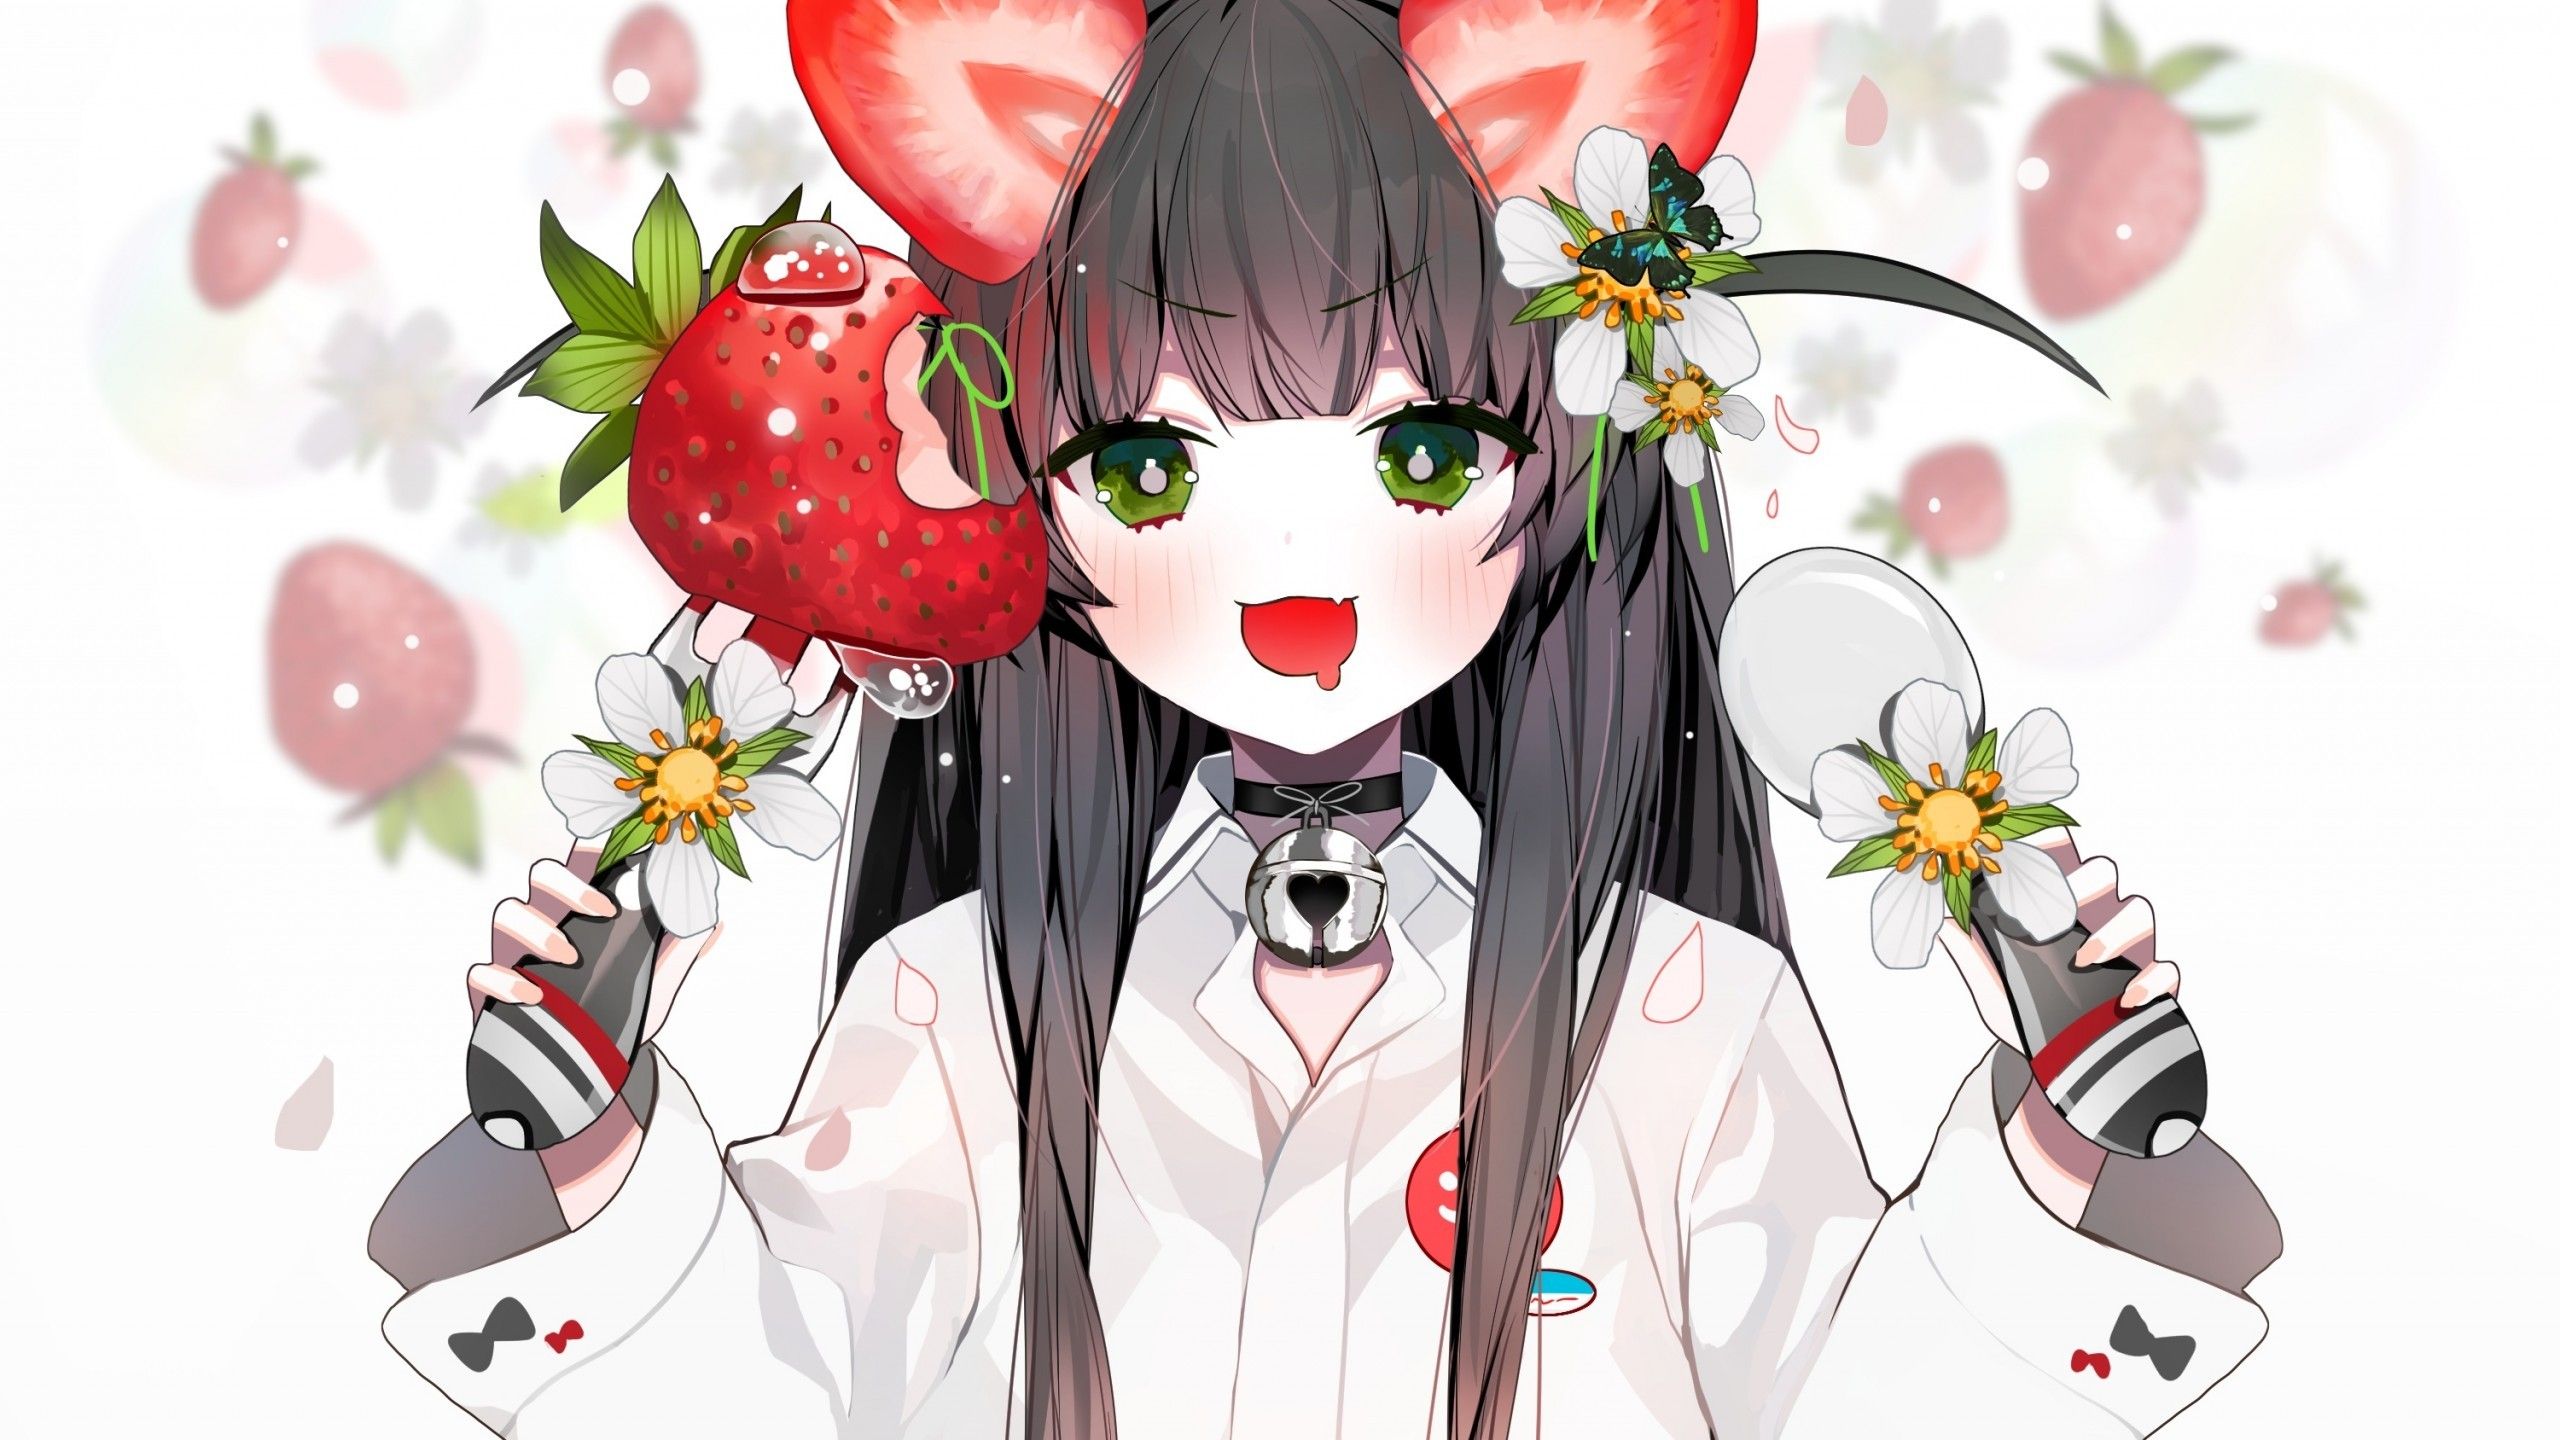 Download 2560x1440 Cute Anime Girl, Green Eyes, Strawberries, Shirt, Fang, Loli Wallpaper for iMac 27 inch